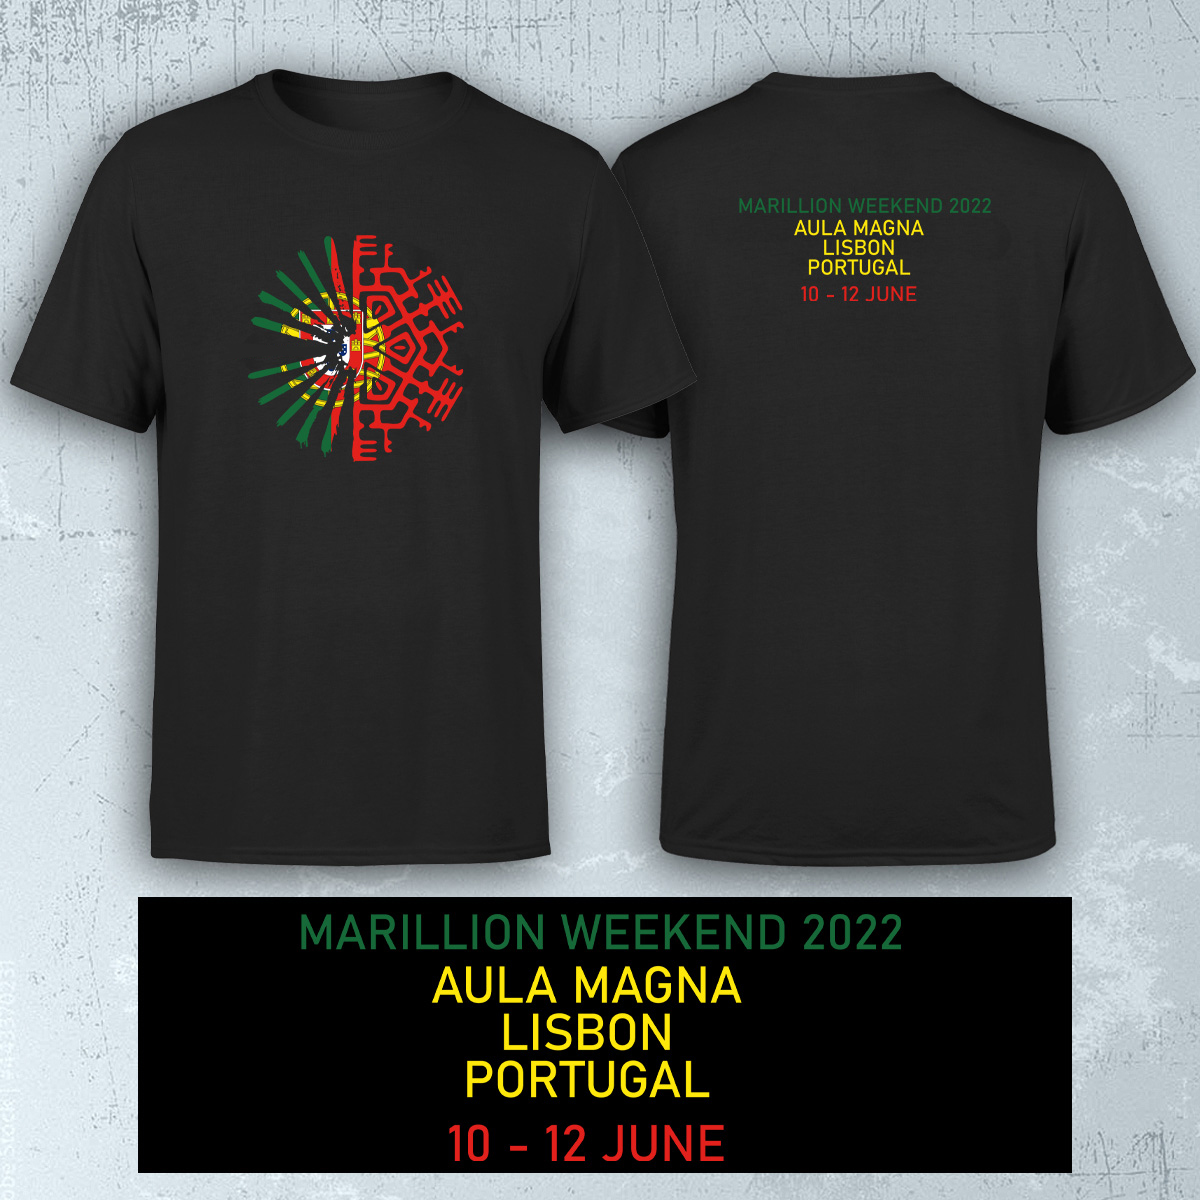 MW 2022 - Portugal Shirts Men's Black T-Shirt